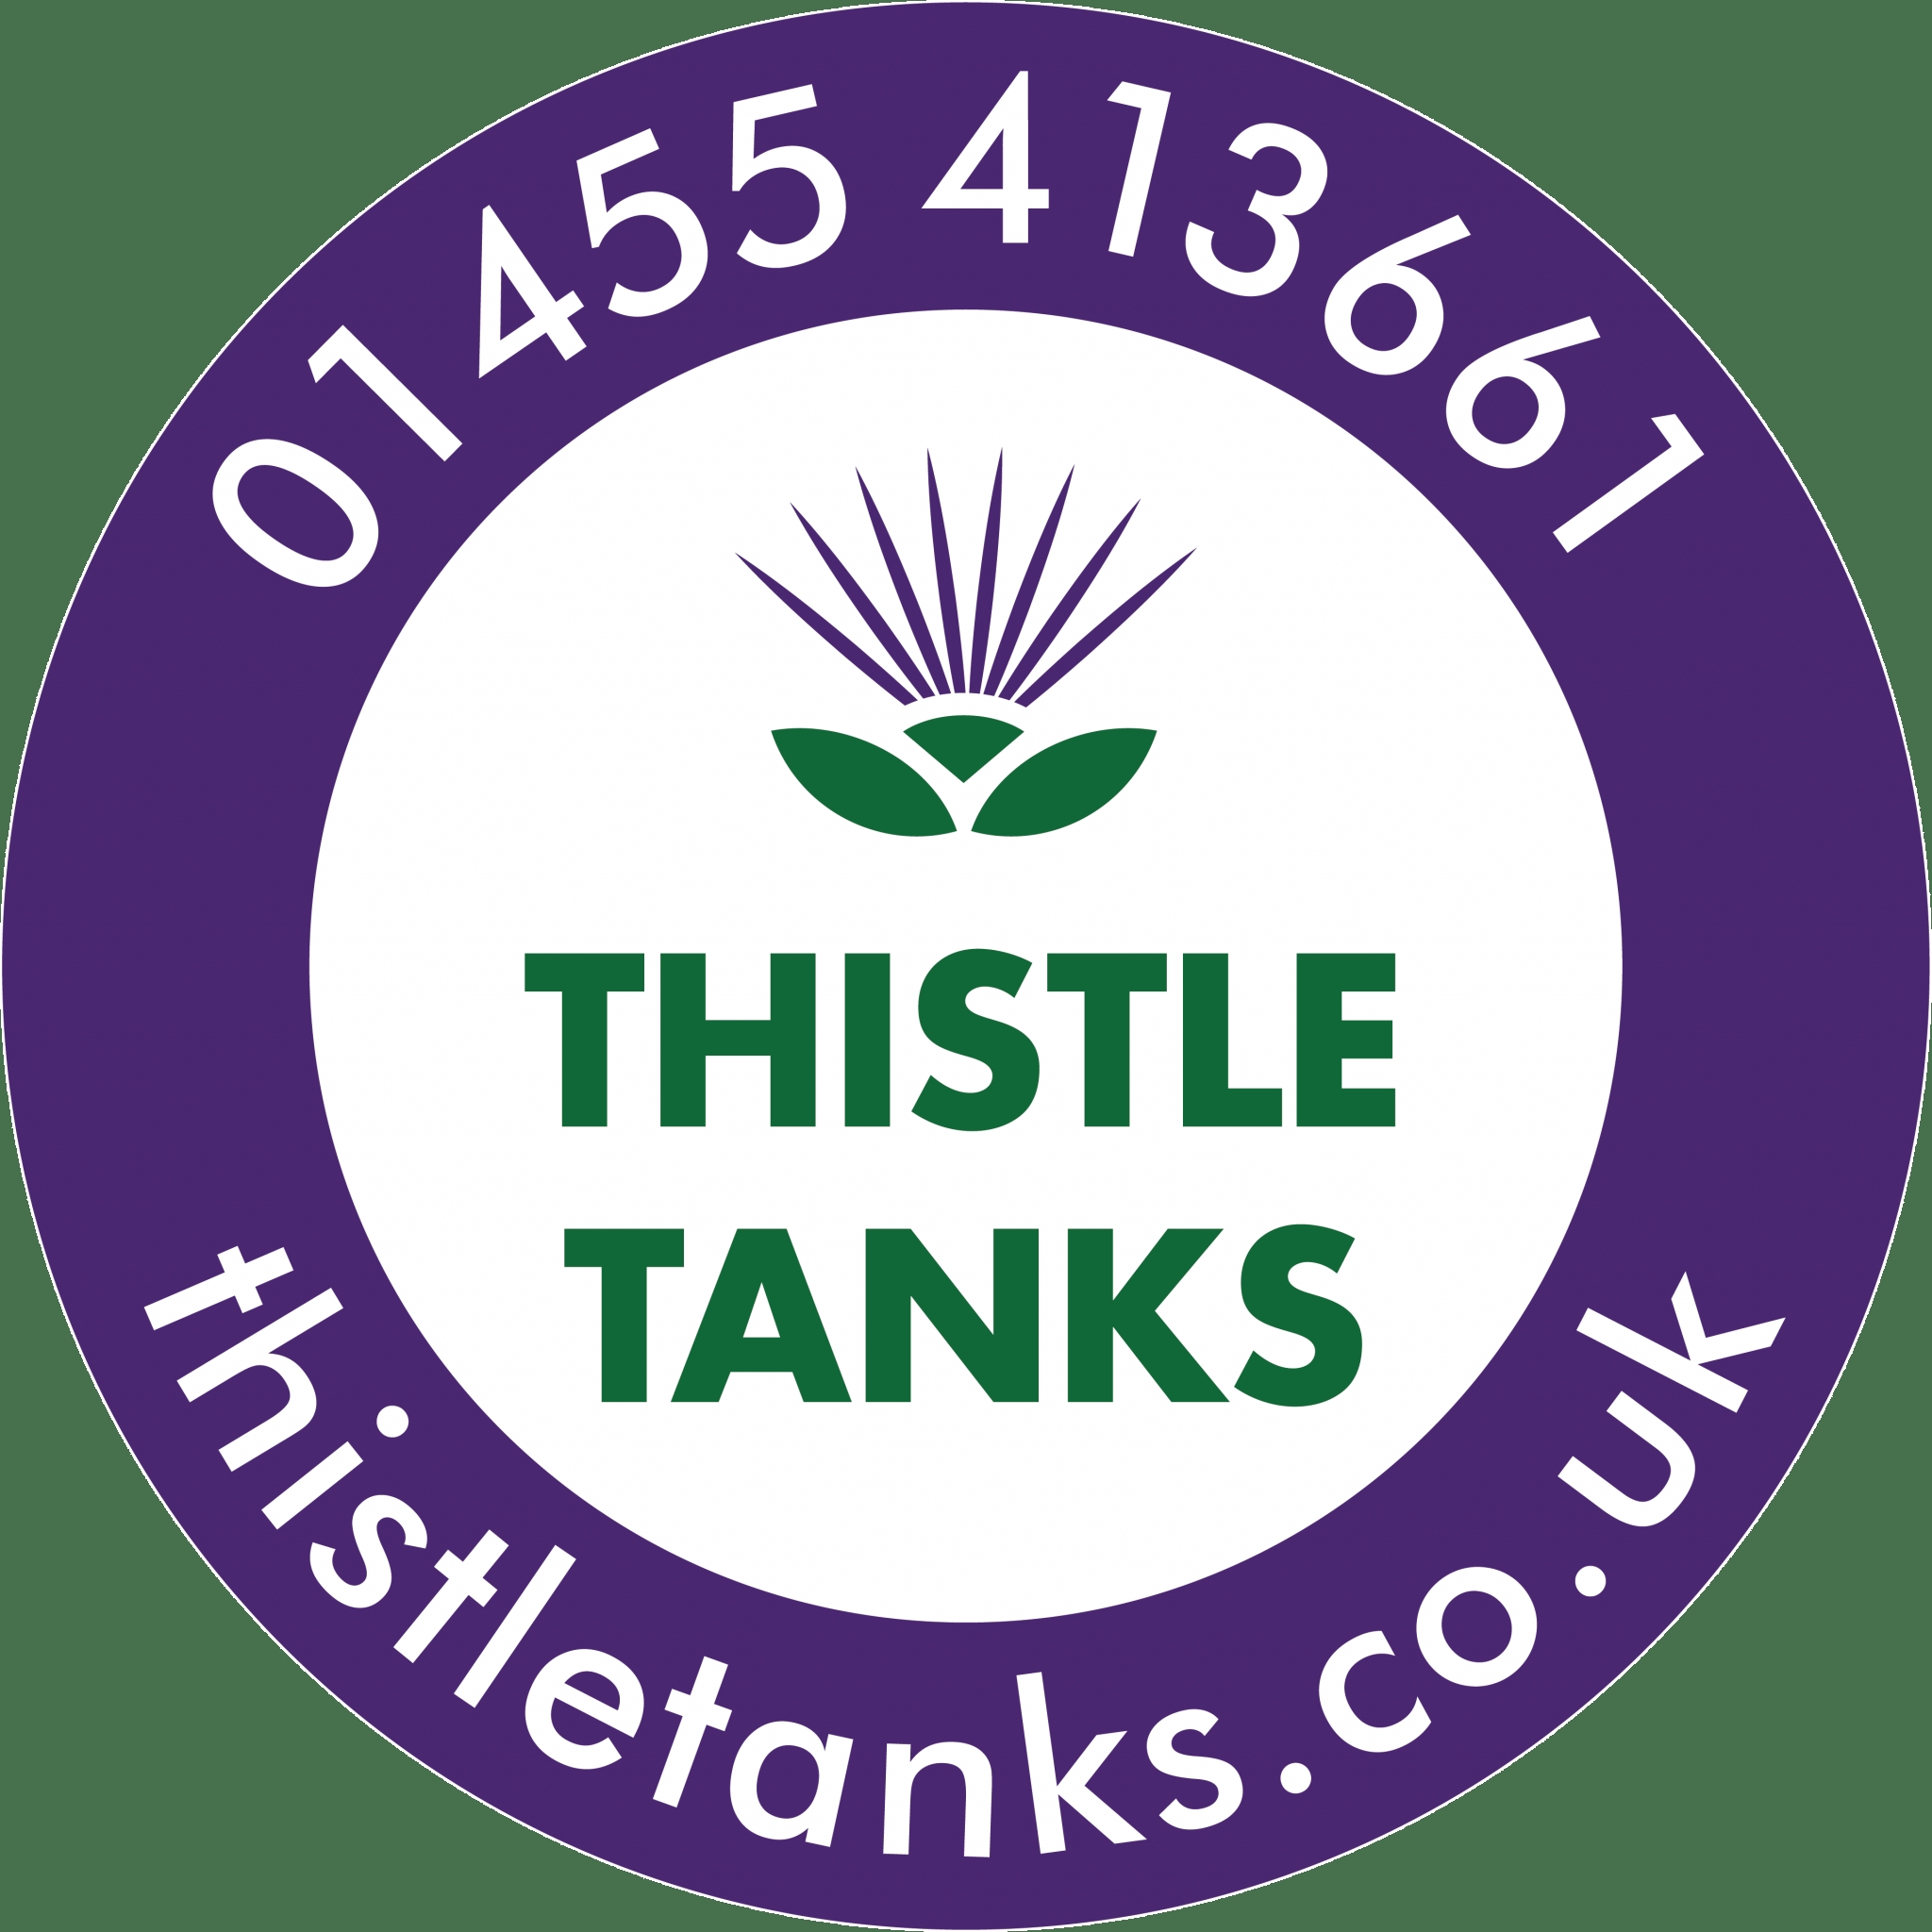 Thistle Tanks Ltd